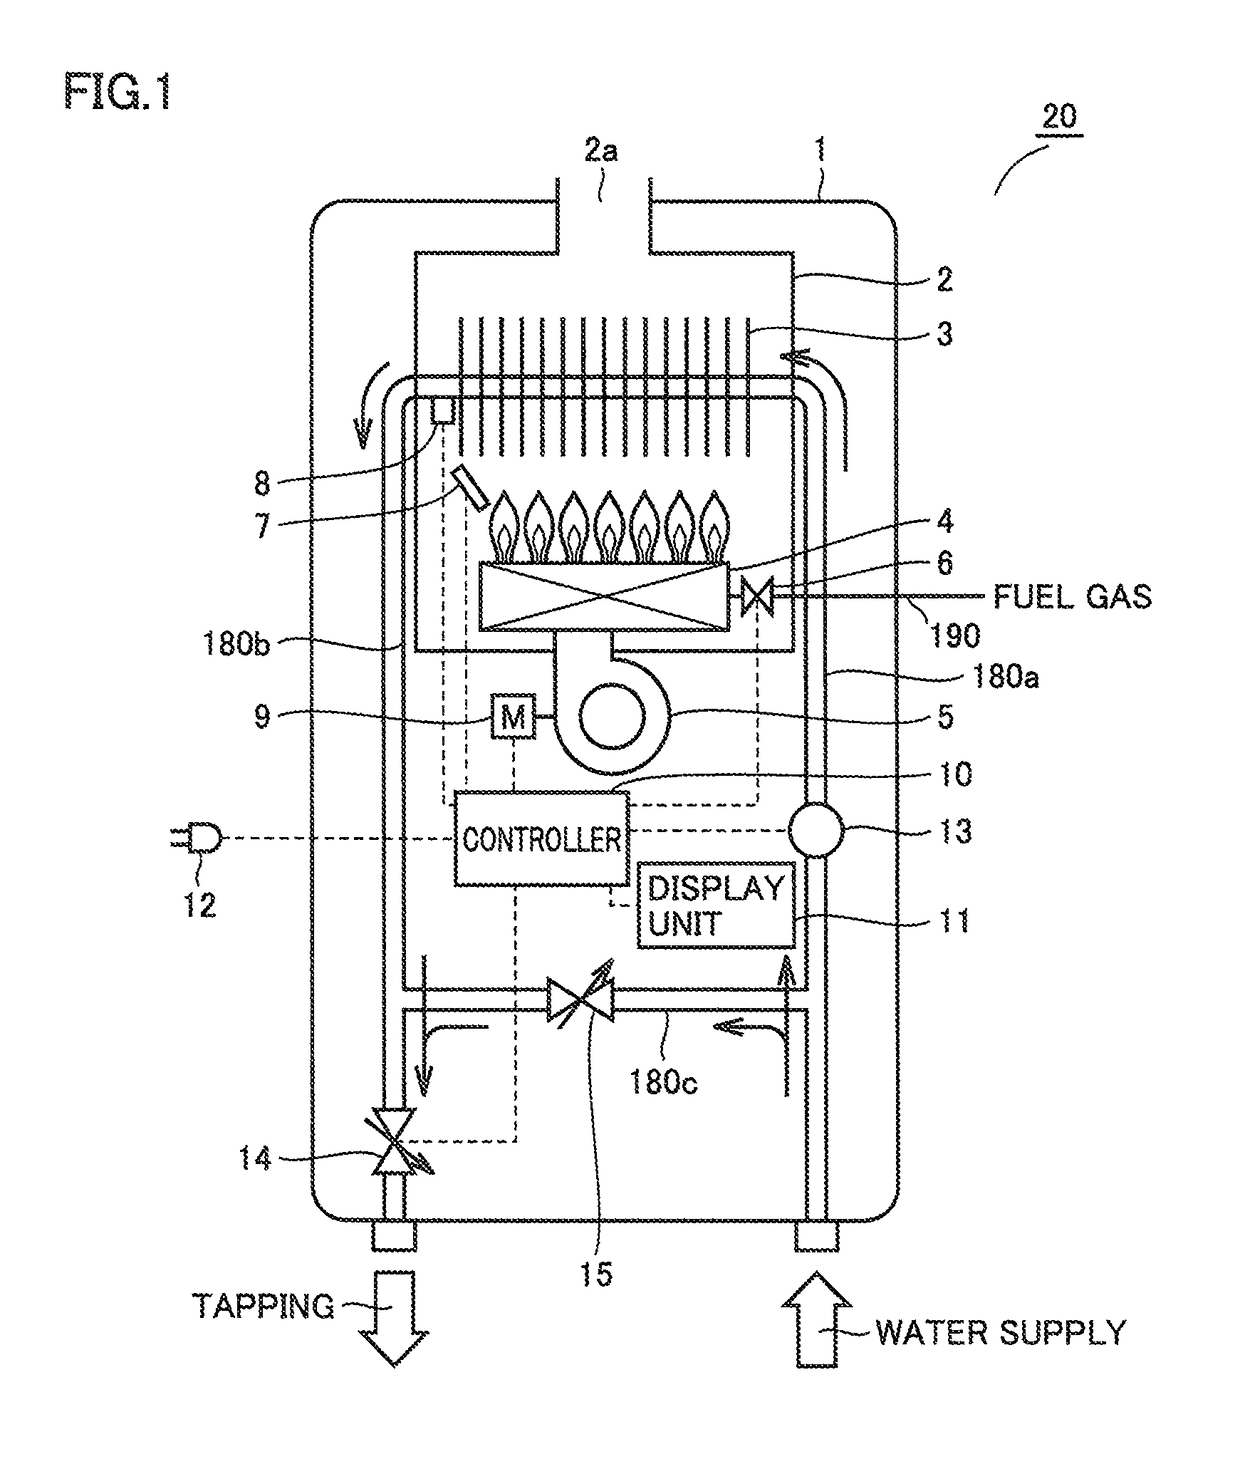 Water heating apparatus